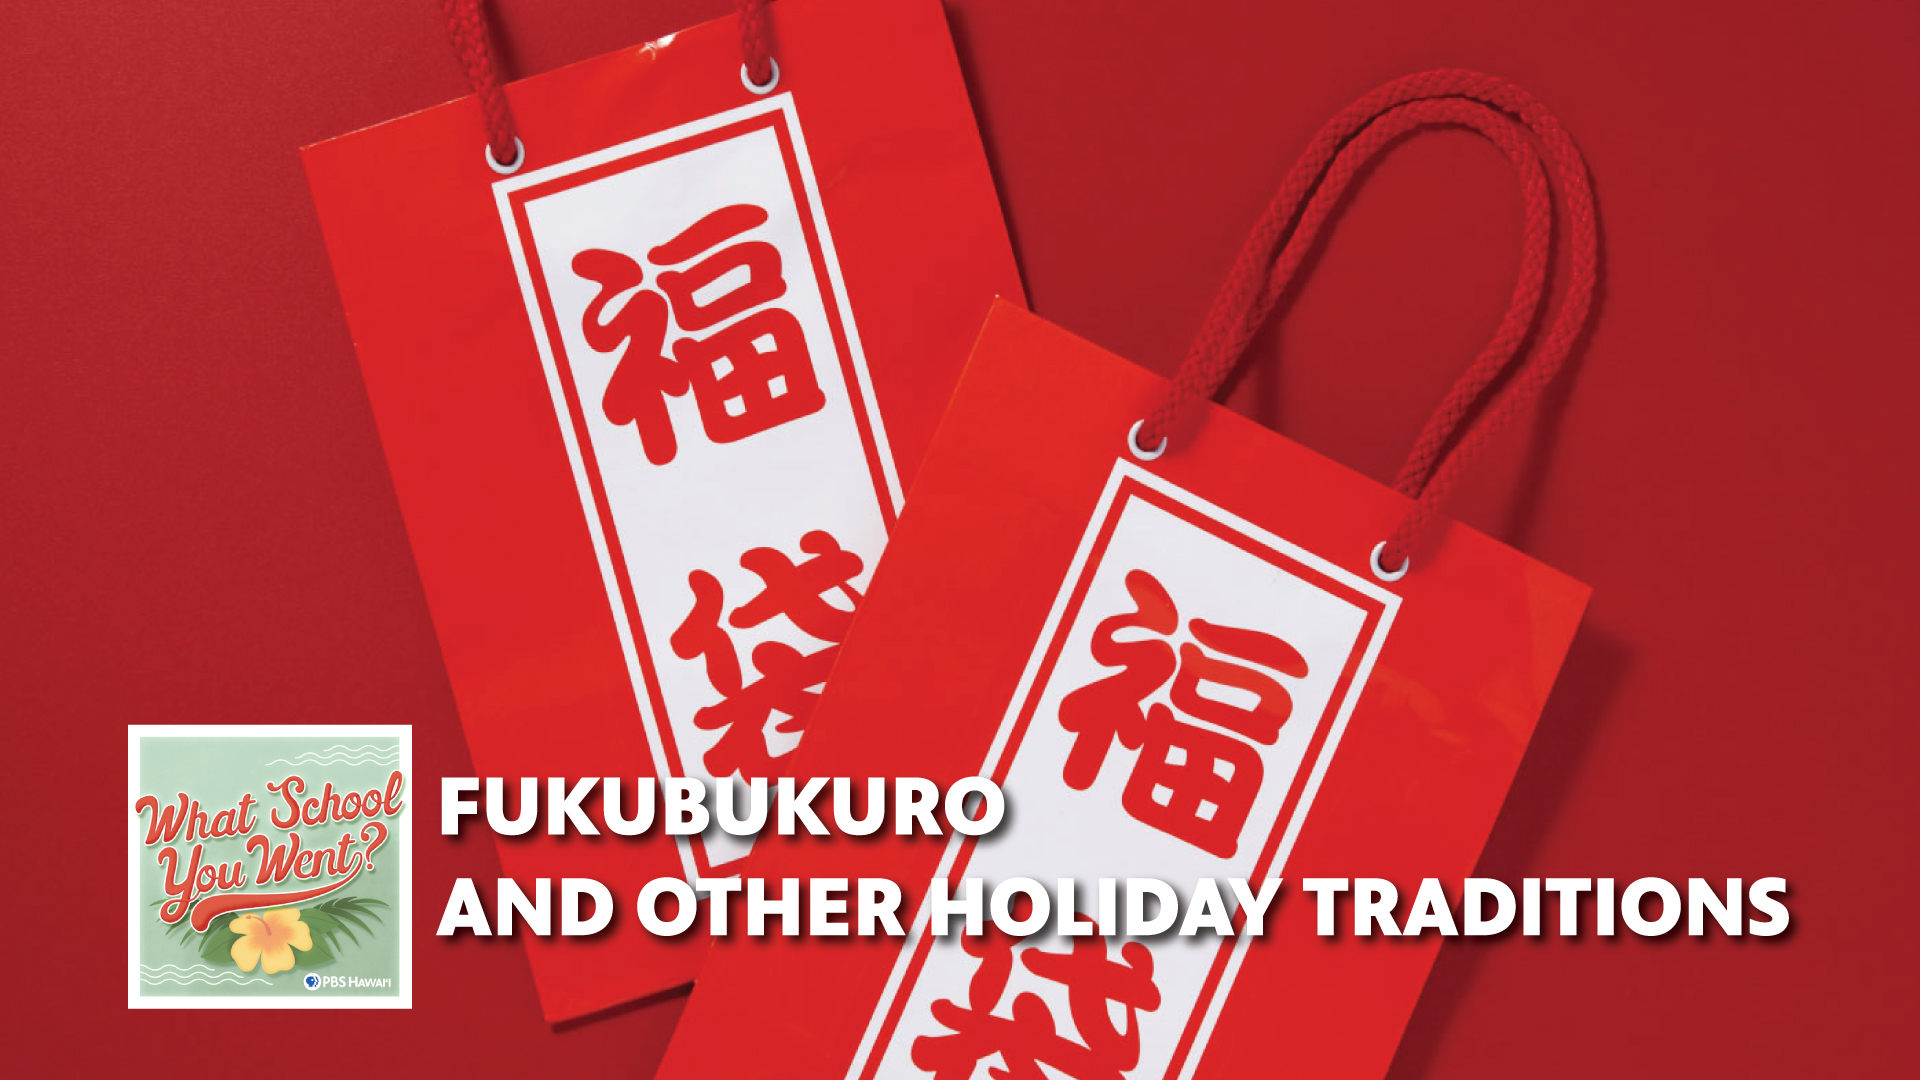 FUKUBUKURO AND OTHER HOLIDAY TRADITIONS